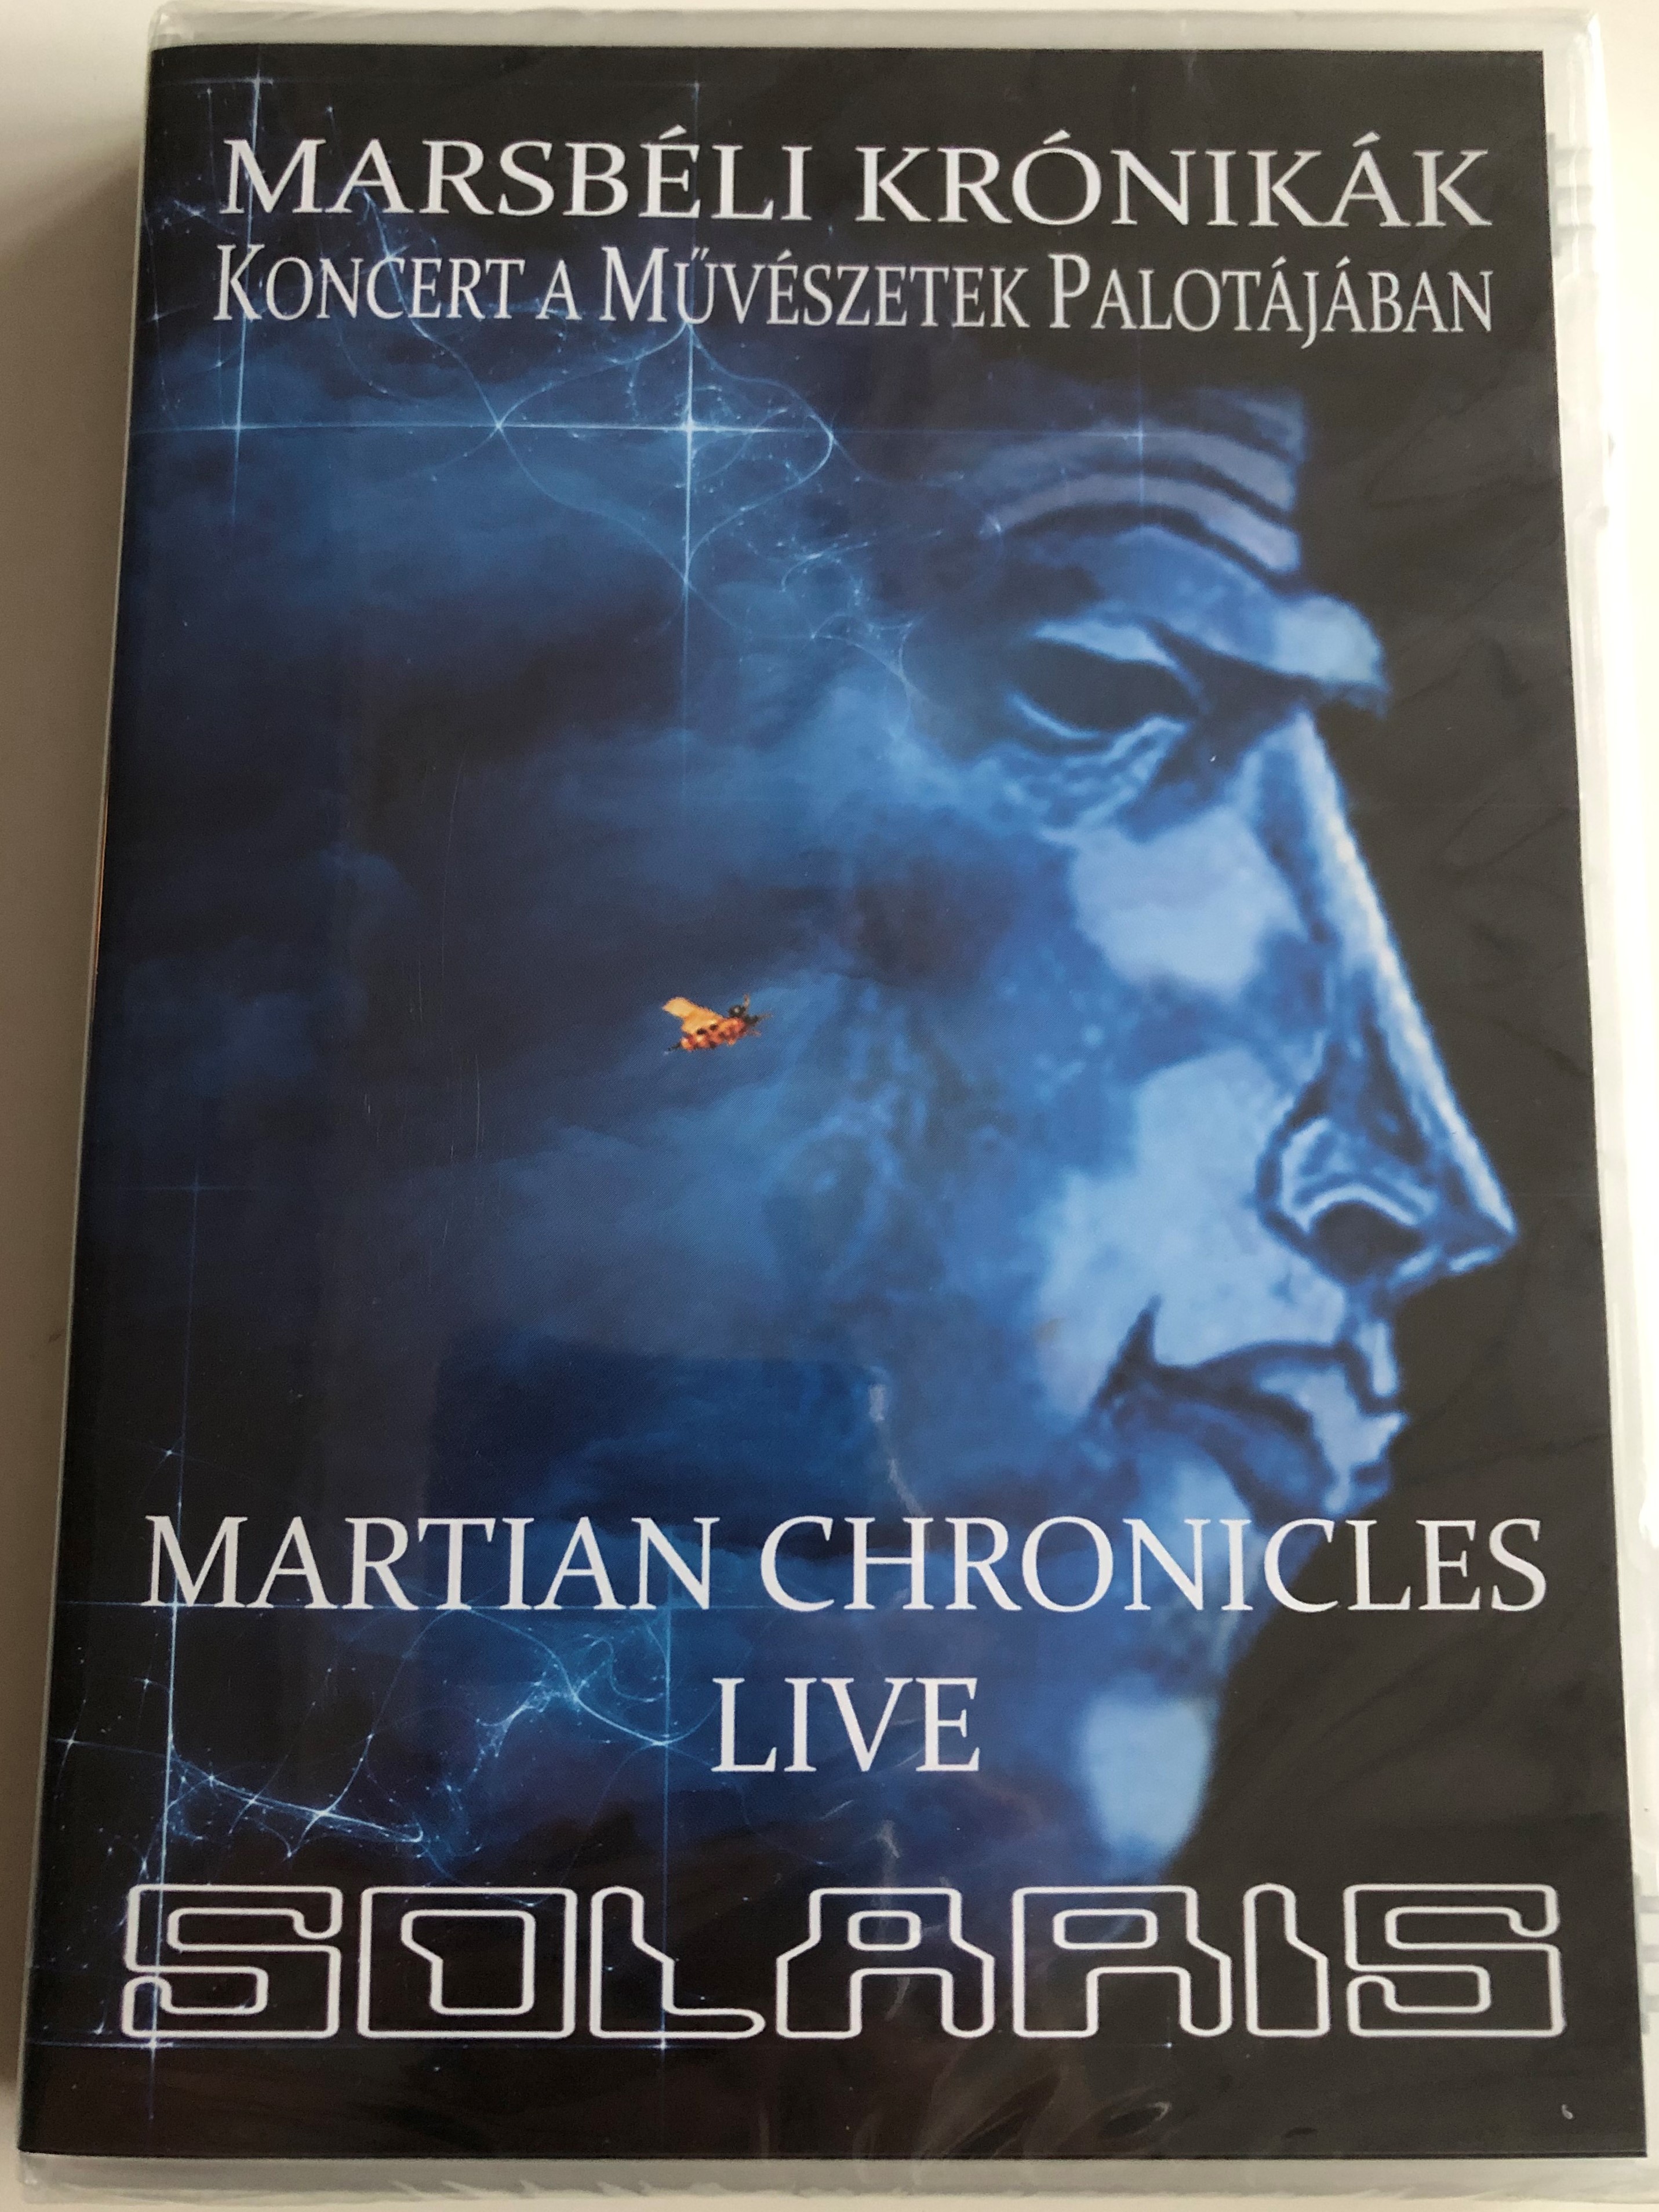 solaris-marsb-li-kr-nik-k-martian-chronicles-live-dvd-2014-1.jpg